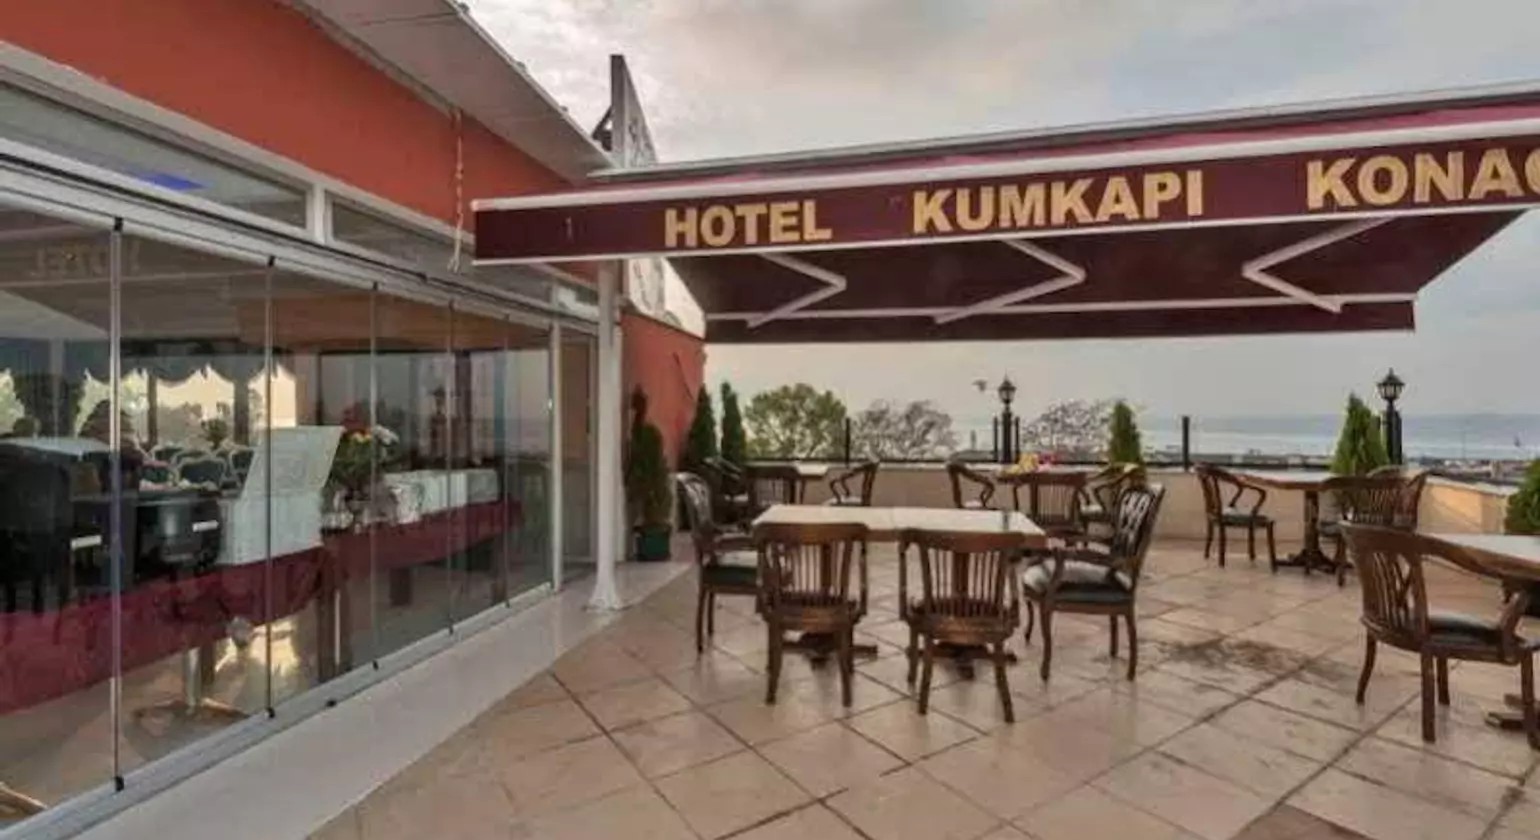 Hotel Kumkapi Konagi